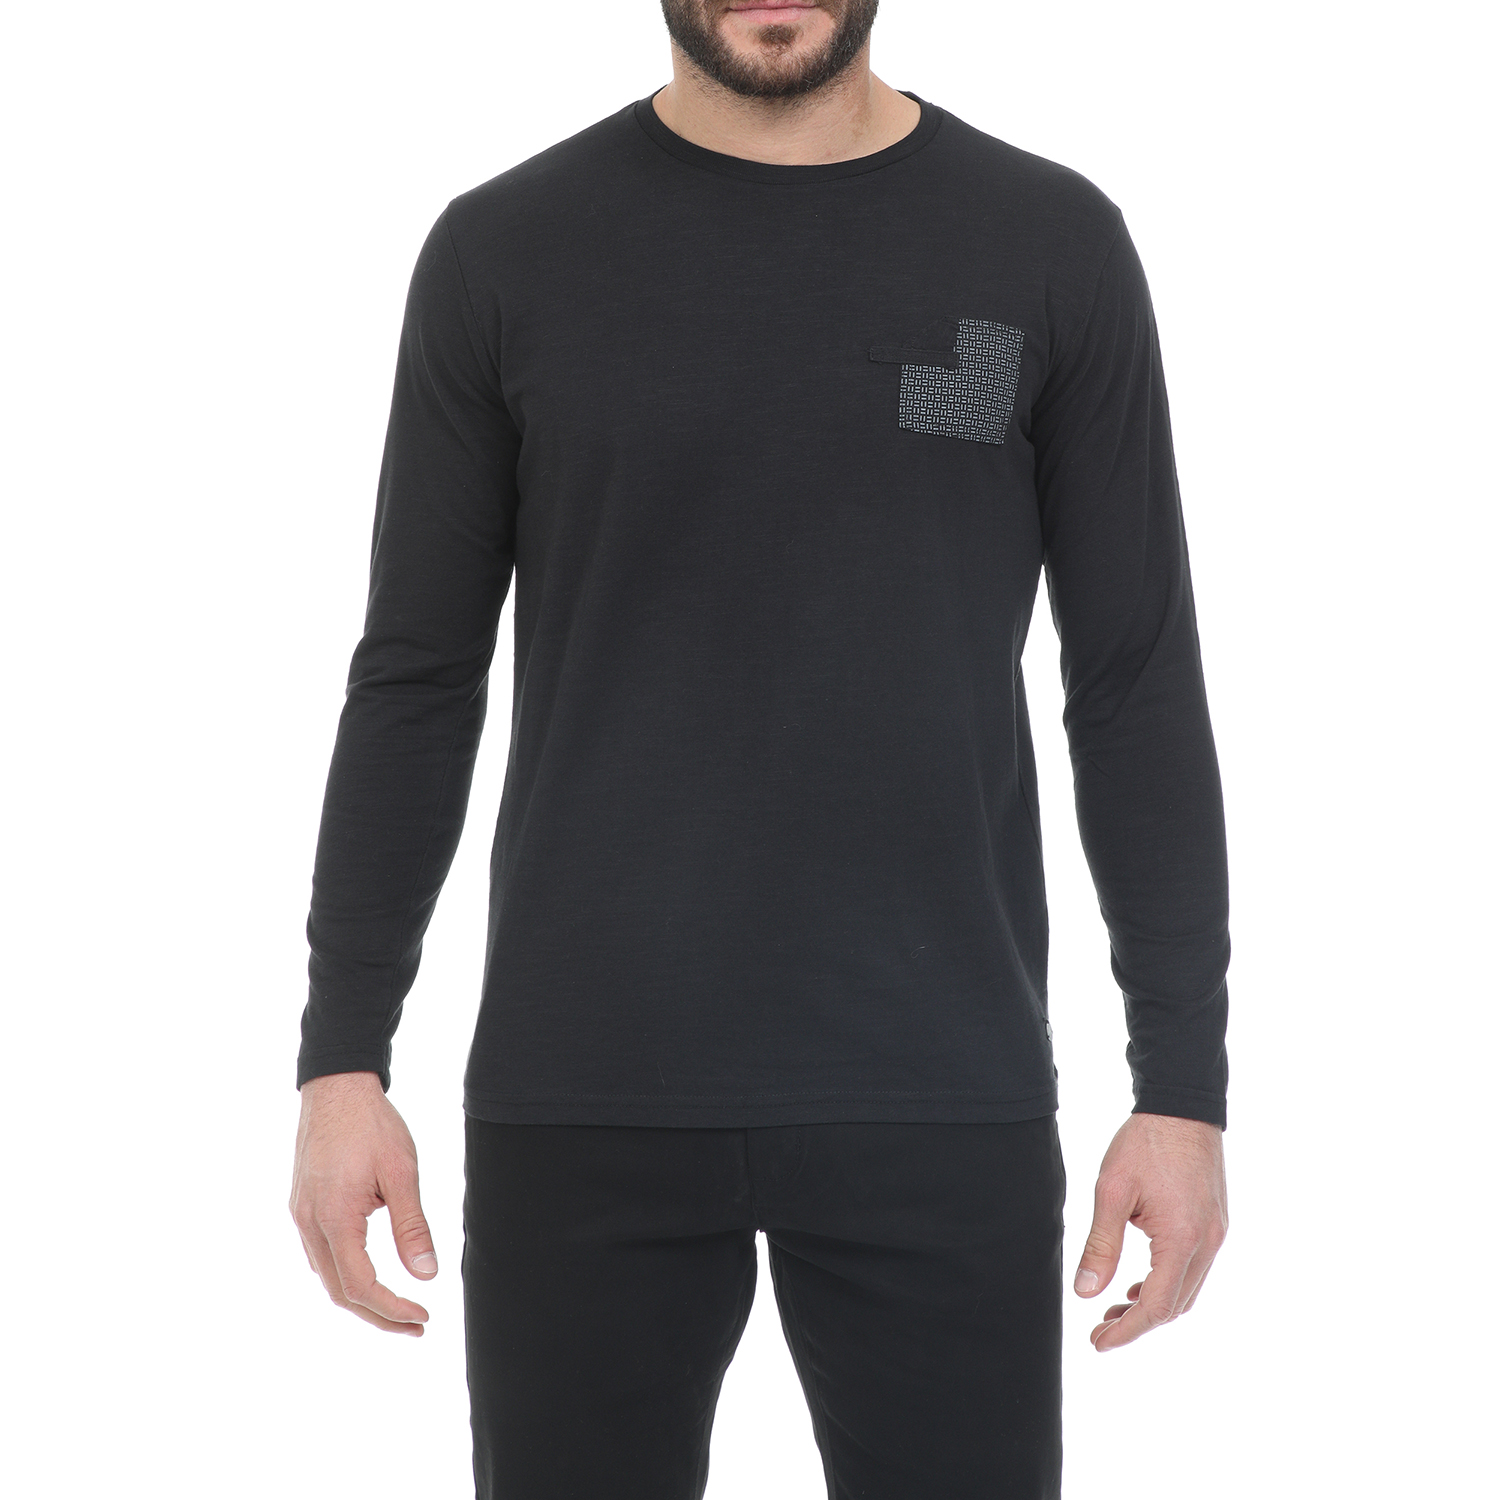 GREENWOOD - Ανδρική μπλούζα GREENWOOD μαύρη Ανδρικά/Ρούχα/Μπλούζες/Μακρυμάνικες